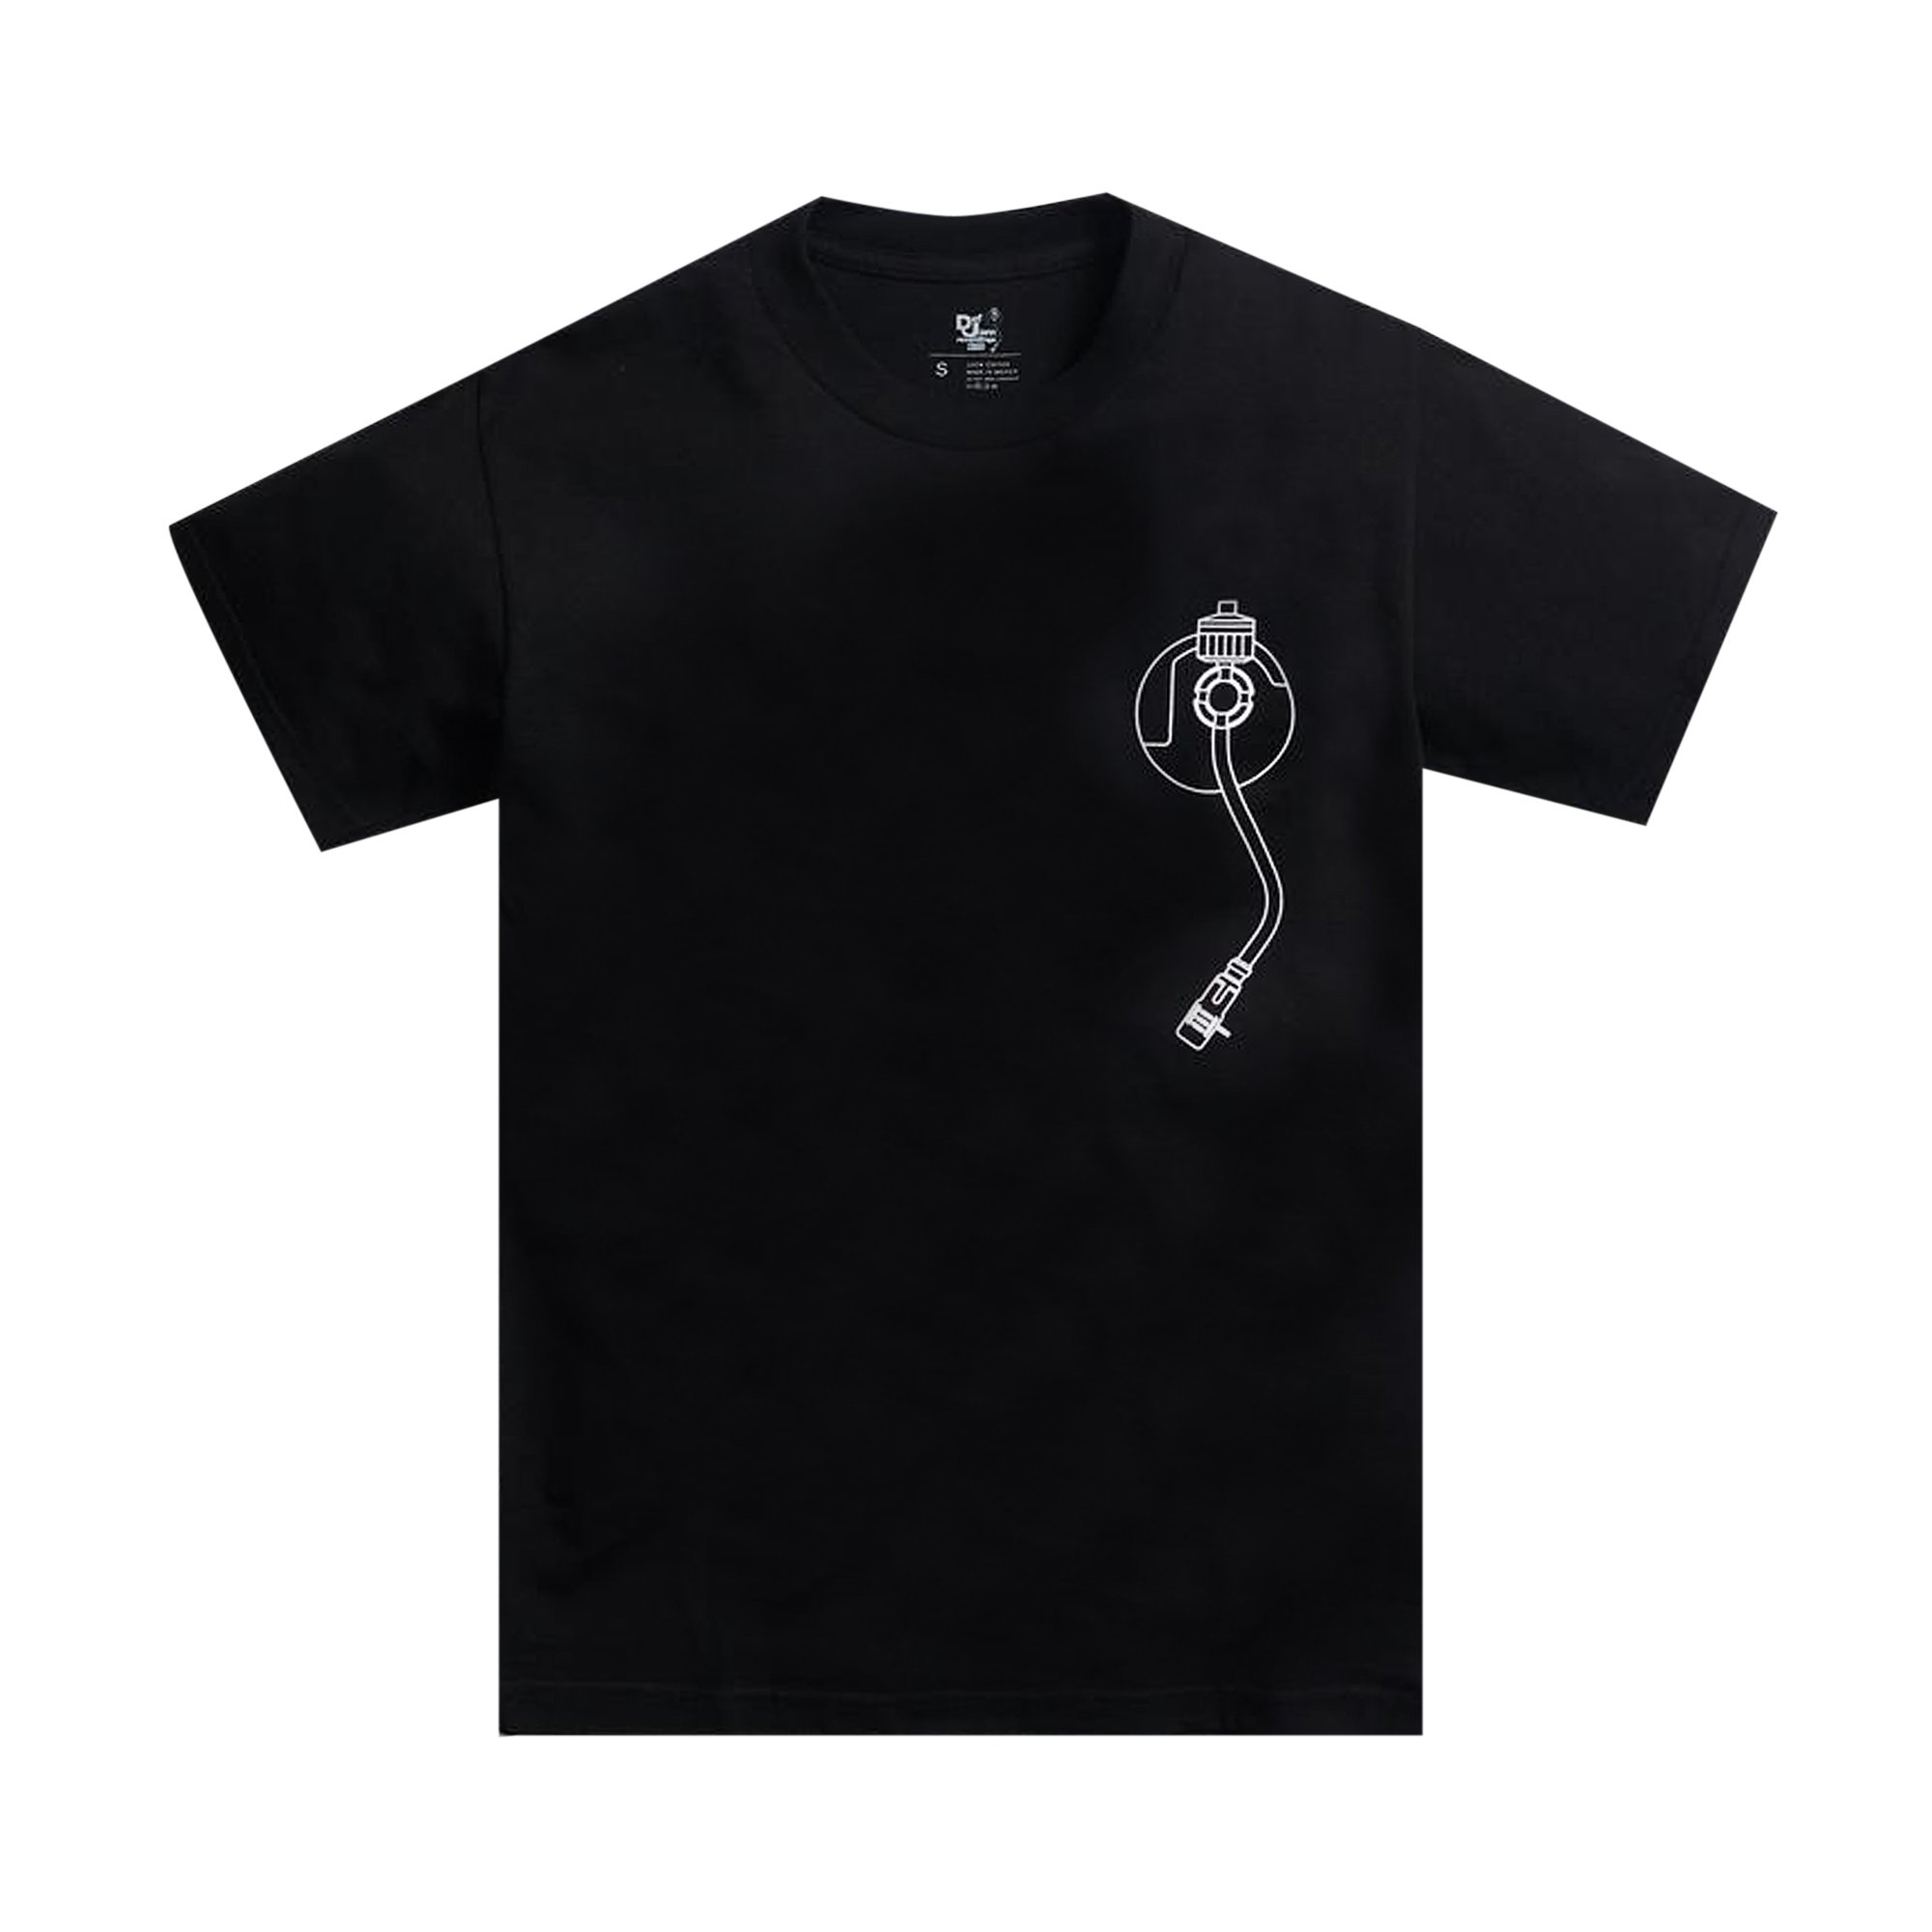 Buy Kith x Def Jam T-Shirt 'Black' - KH3571 100 | GOAT UK